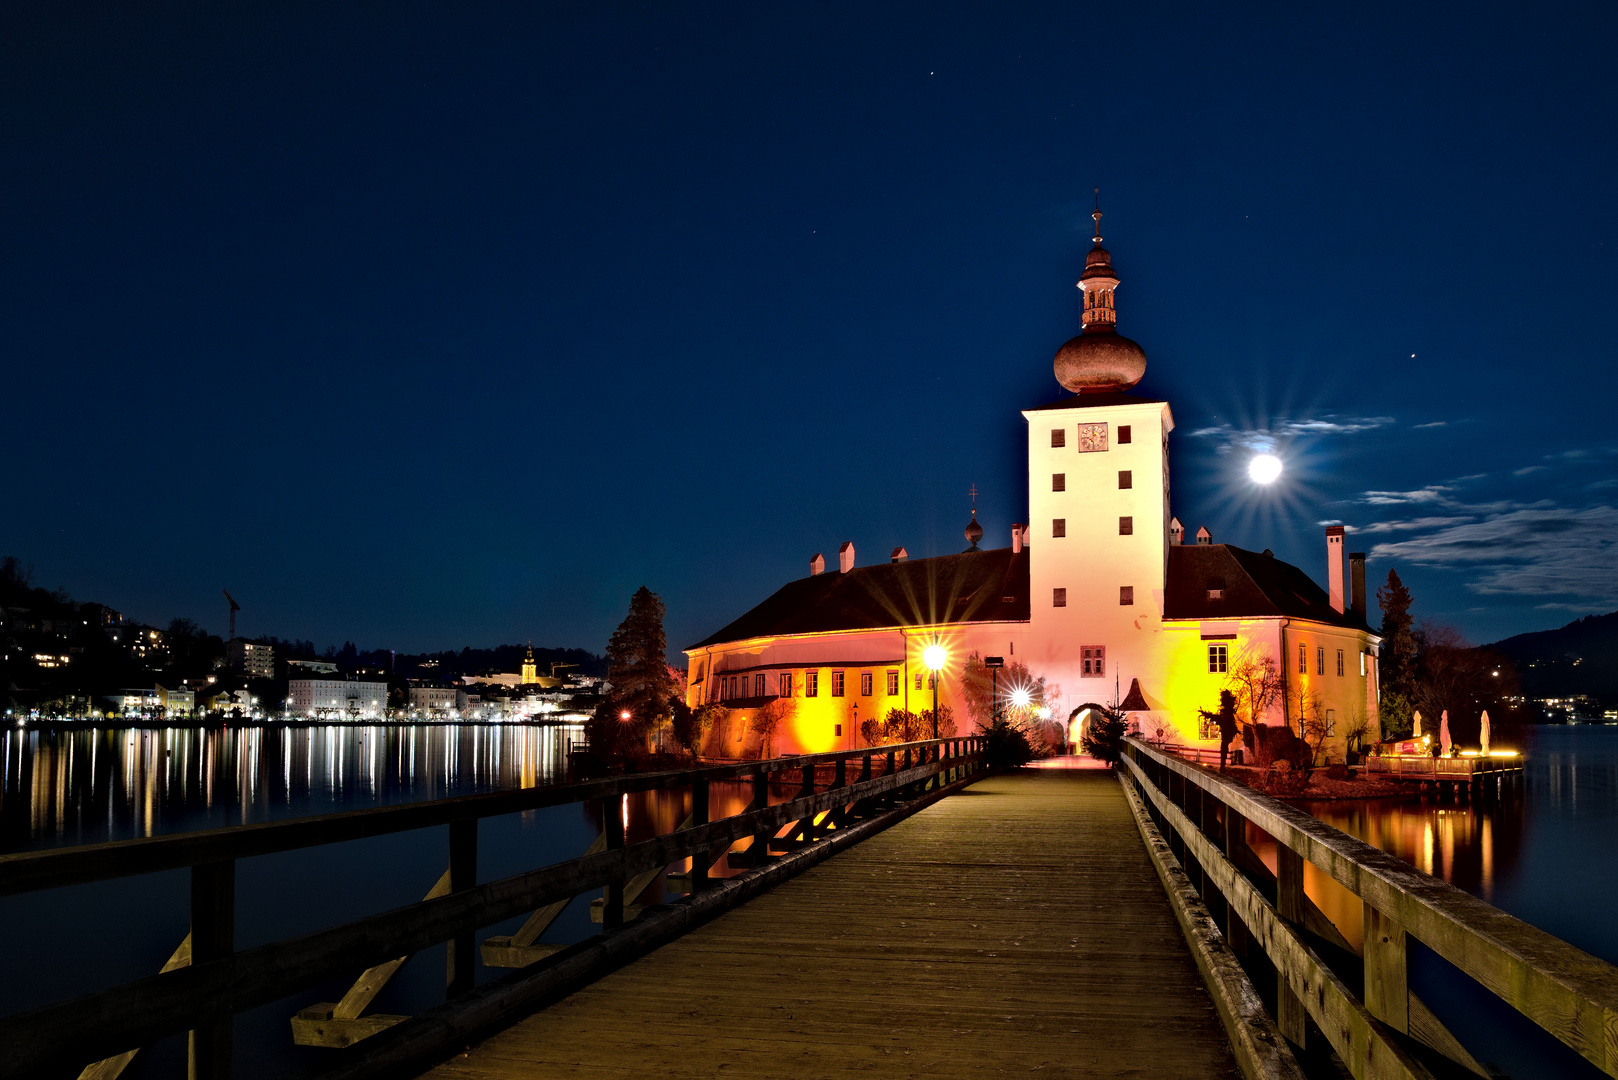 Schloss Orth